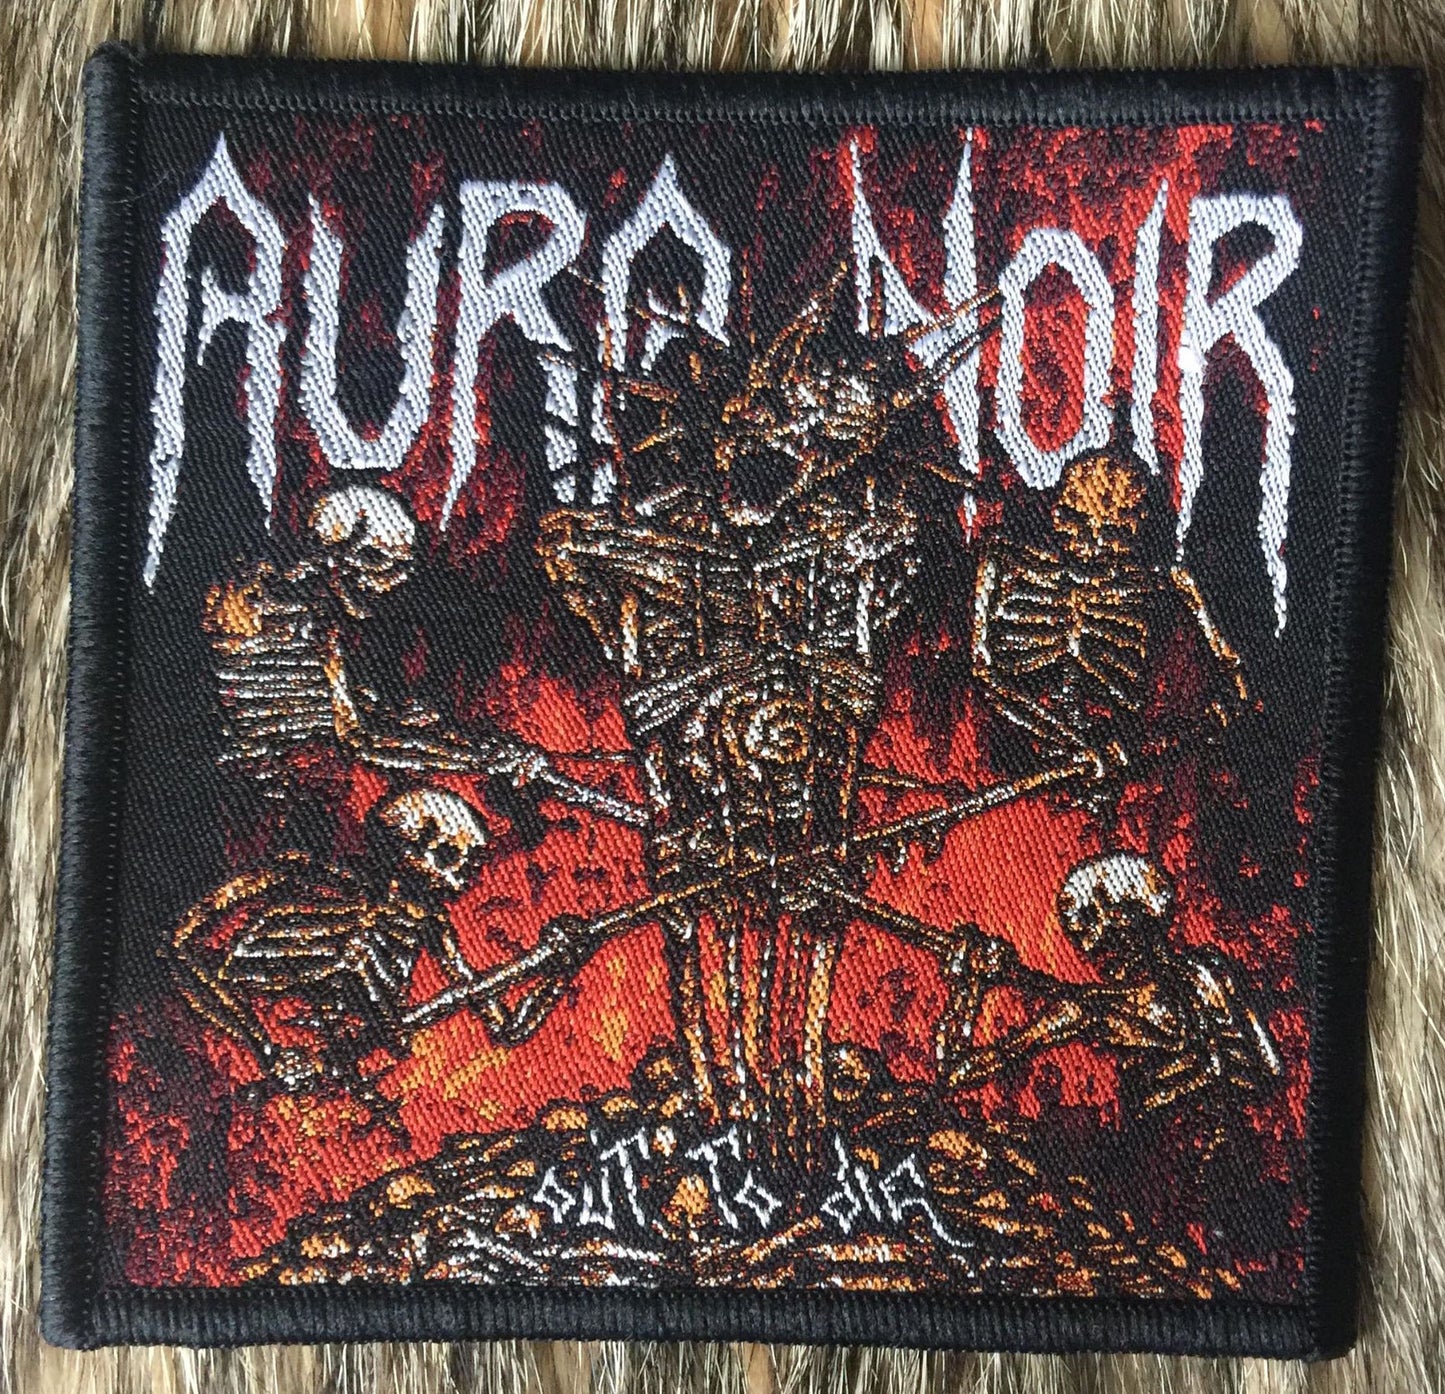 Aura Noir - Out To Die Black Border Patch